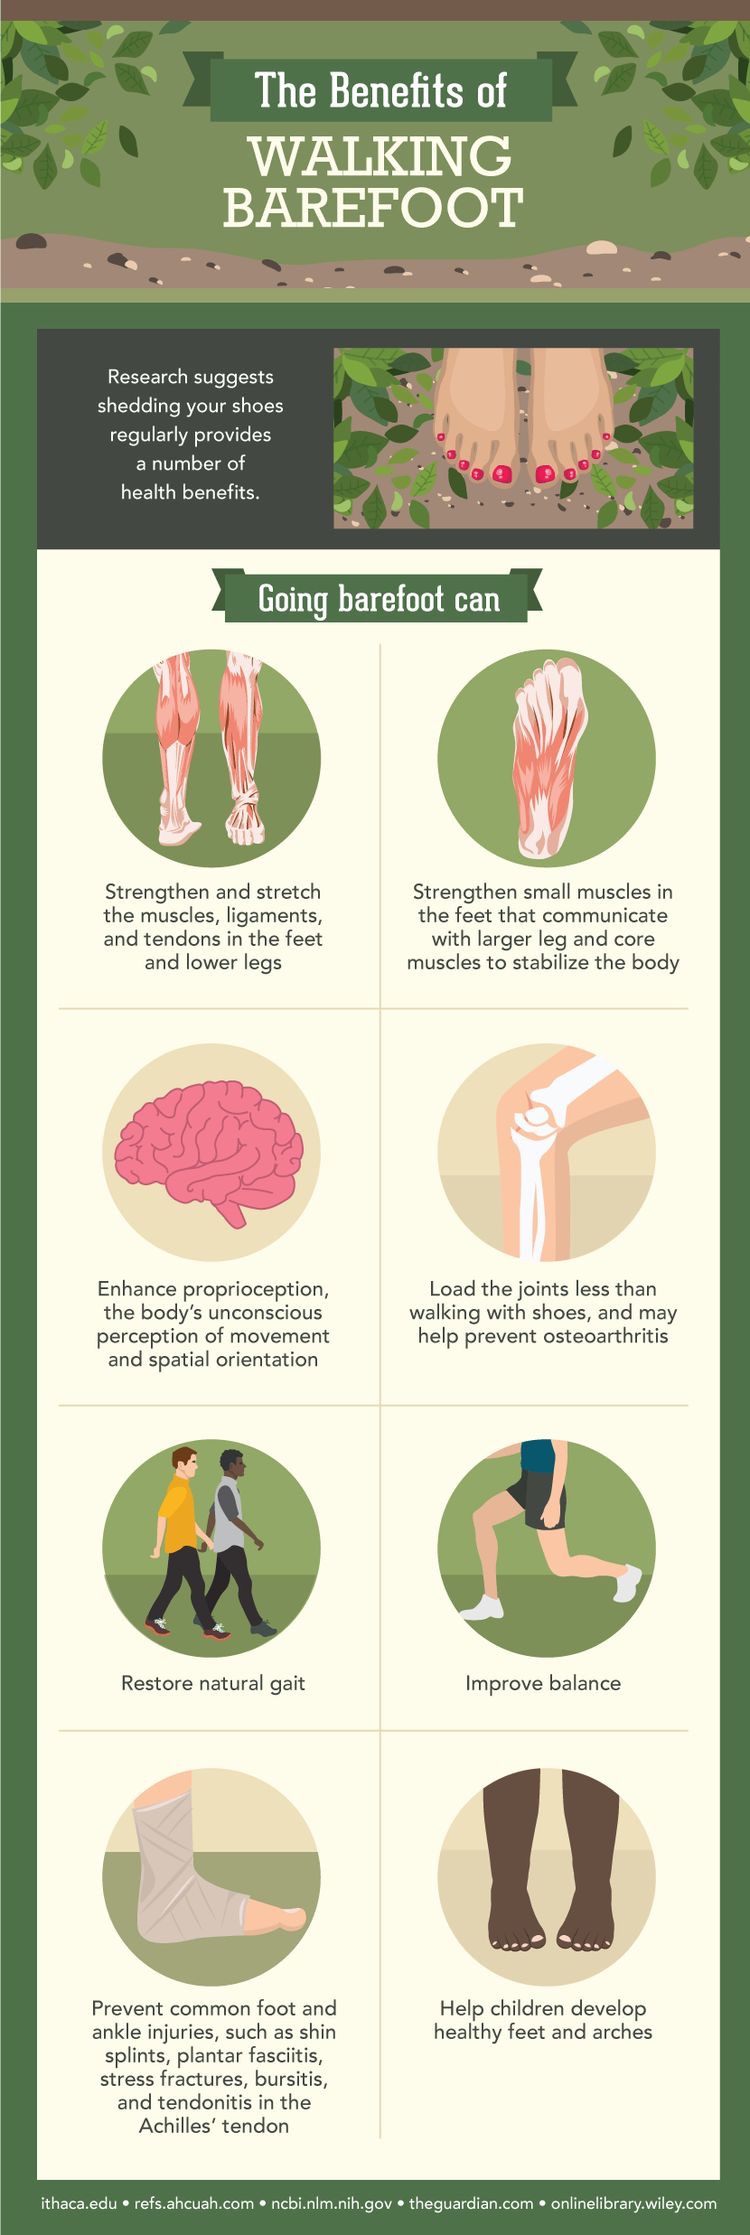 Benefits of Walking Barefoot